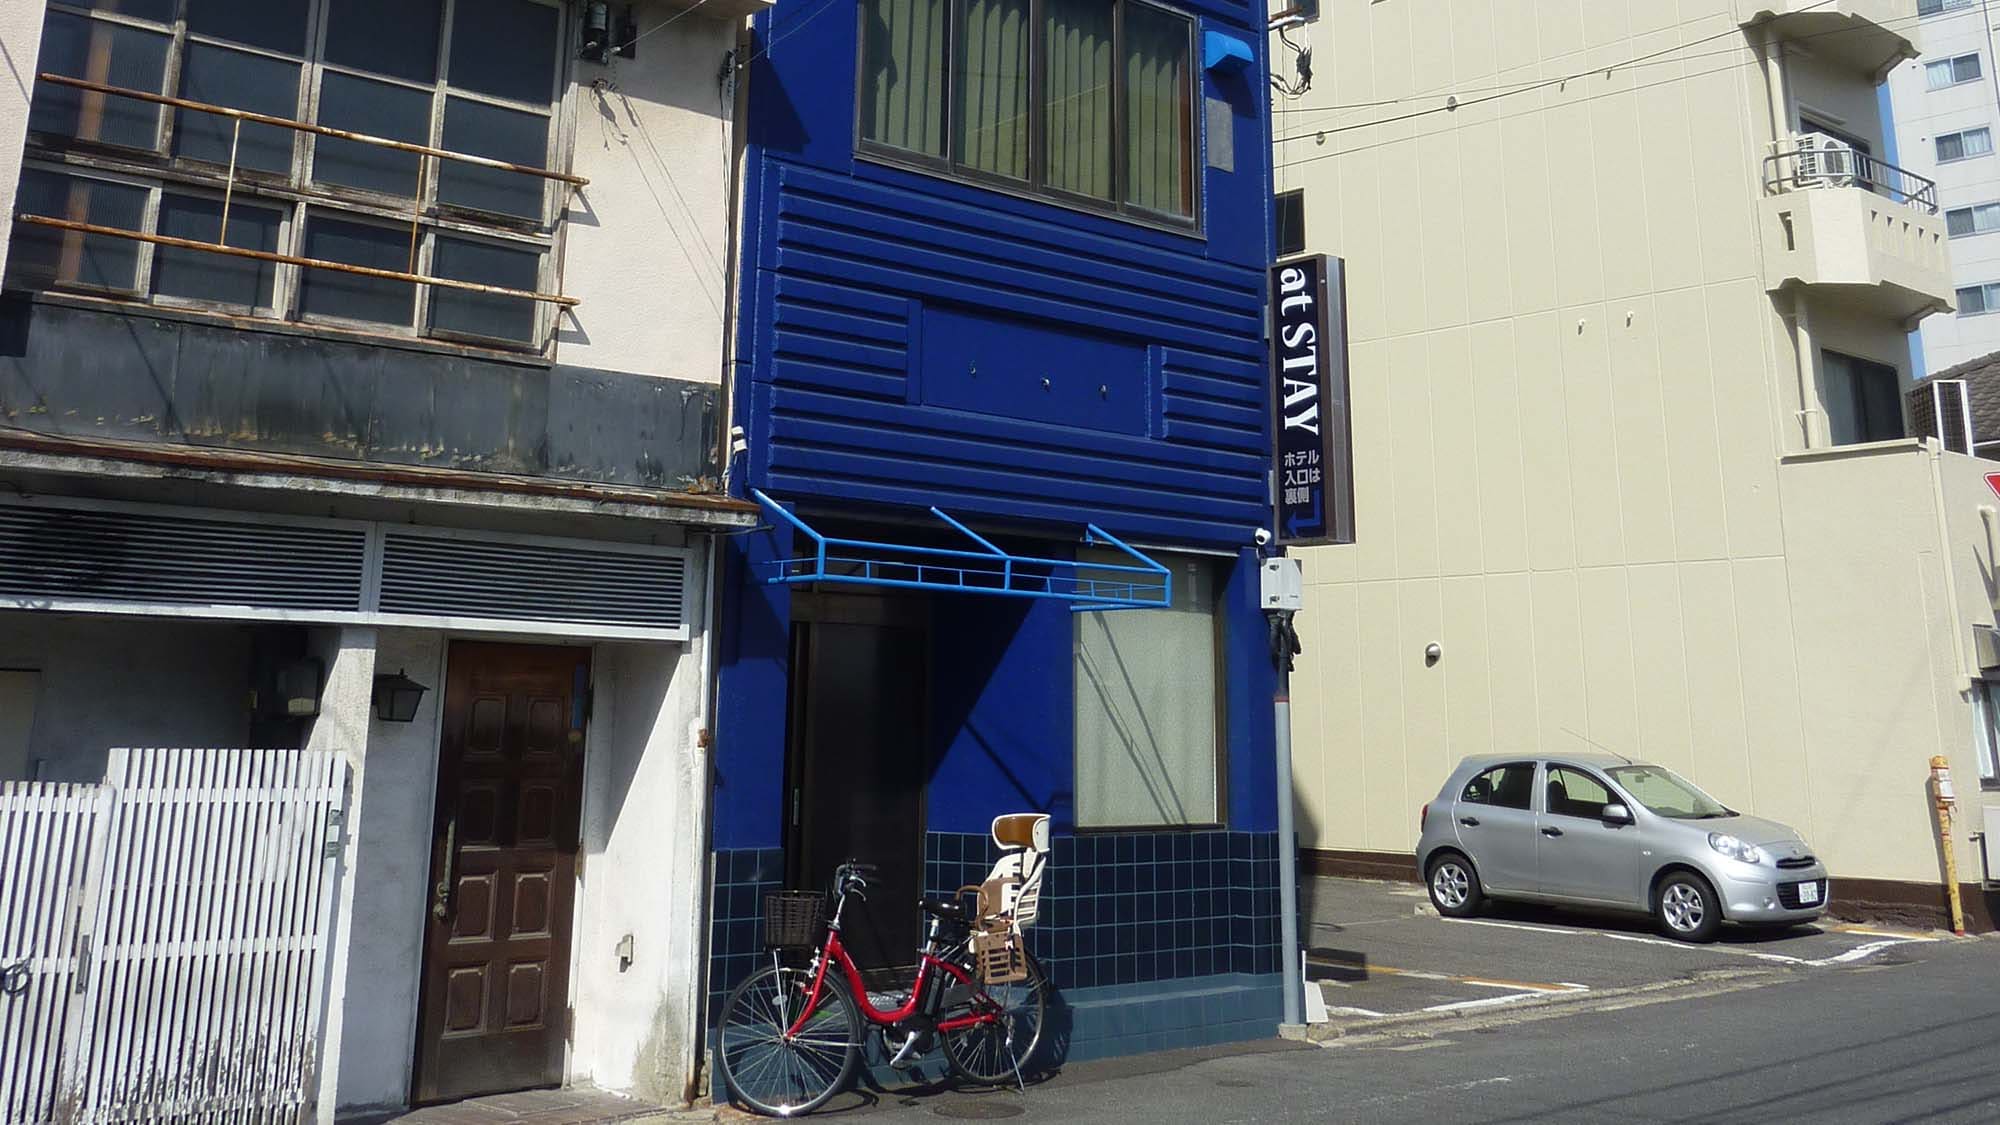 ・ [Facility exterior] The blue exterior is a landmark.